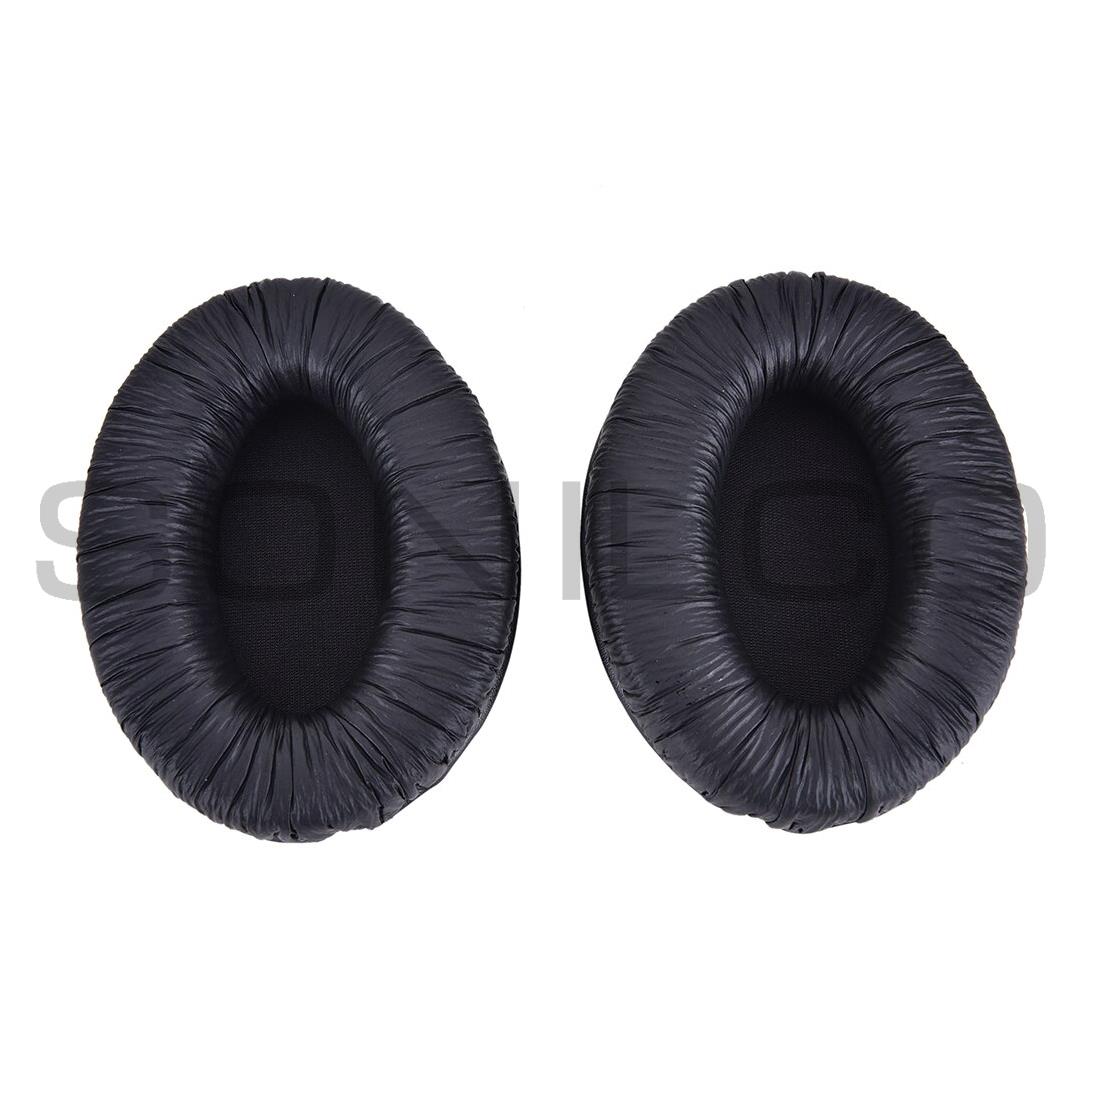 Picture of 1 pair Earpads Foam Cushions for Sennheiser HD280 Pro HD281 HD280 Headphones